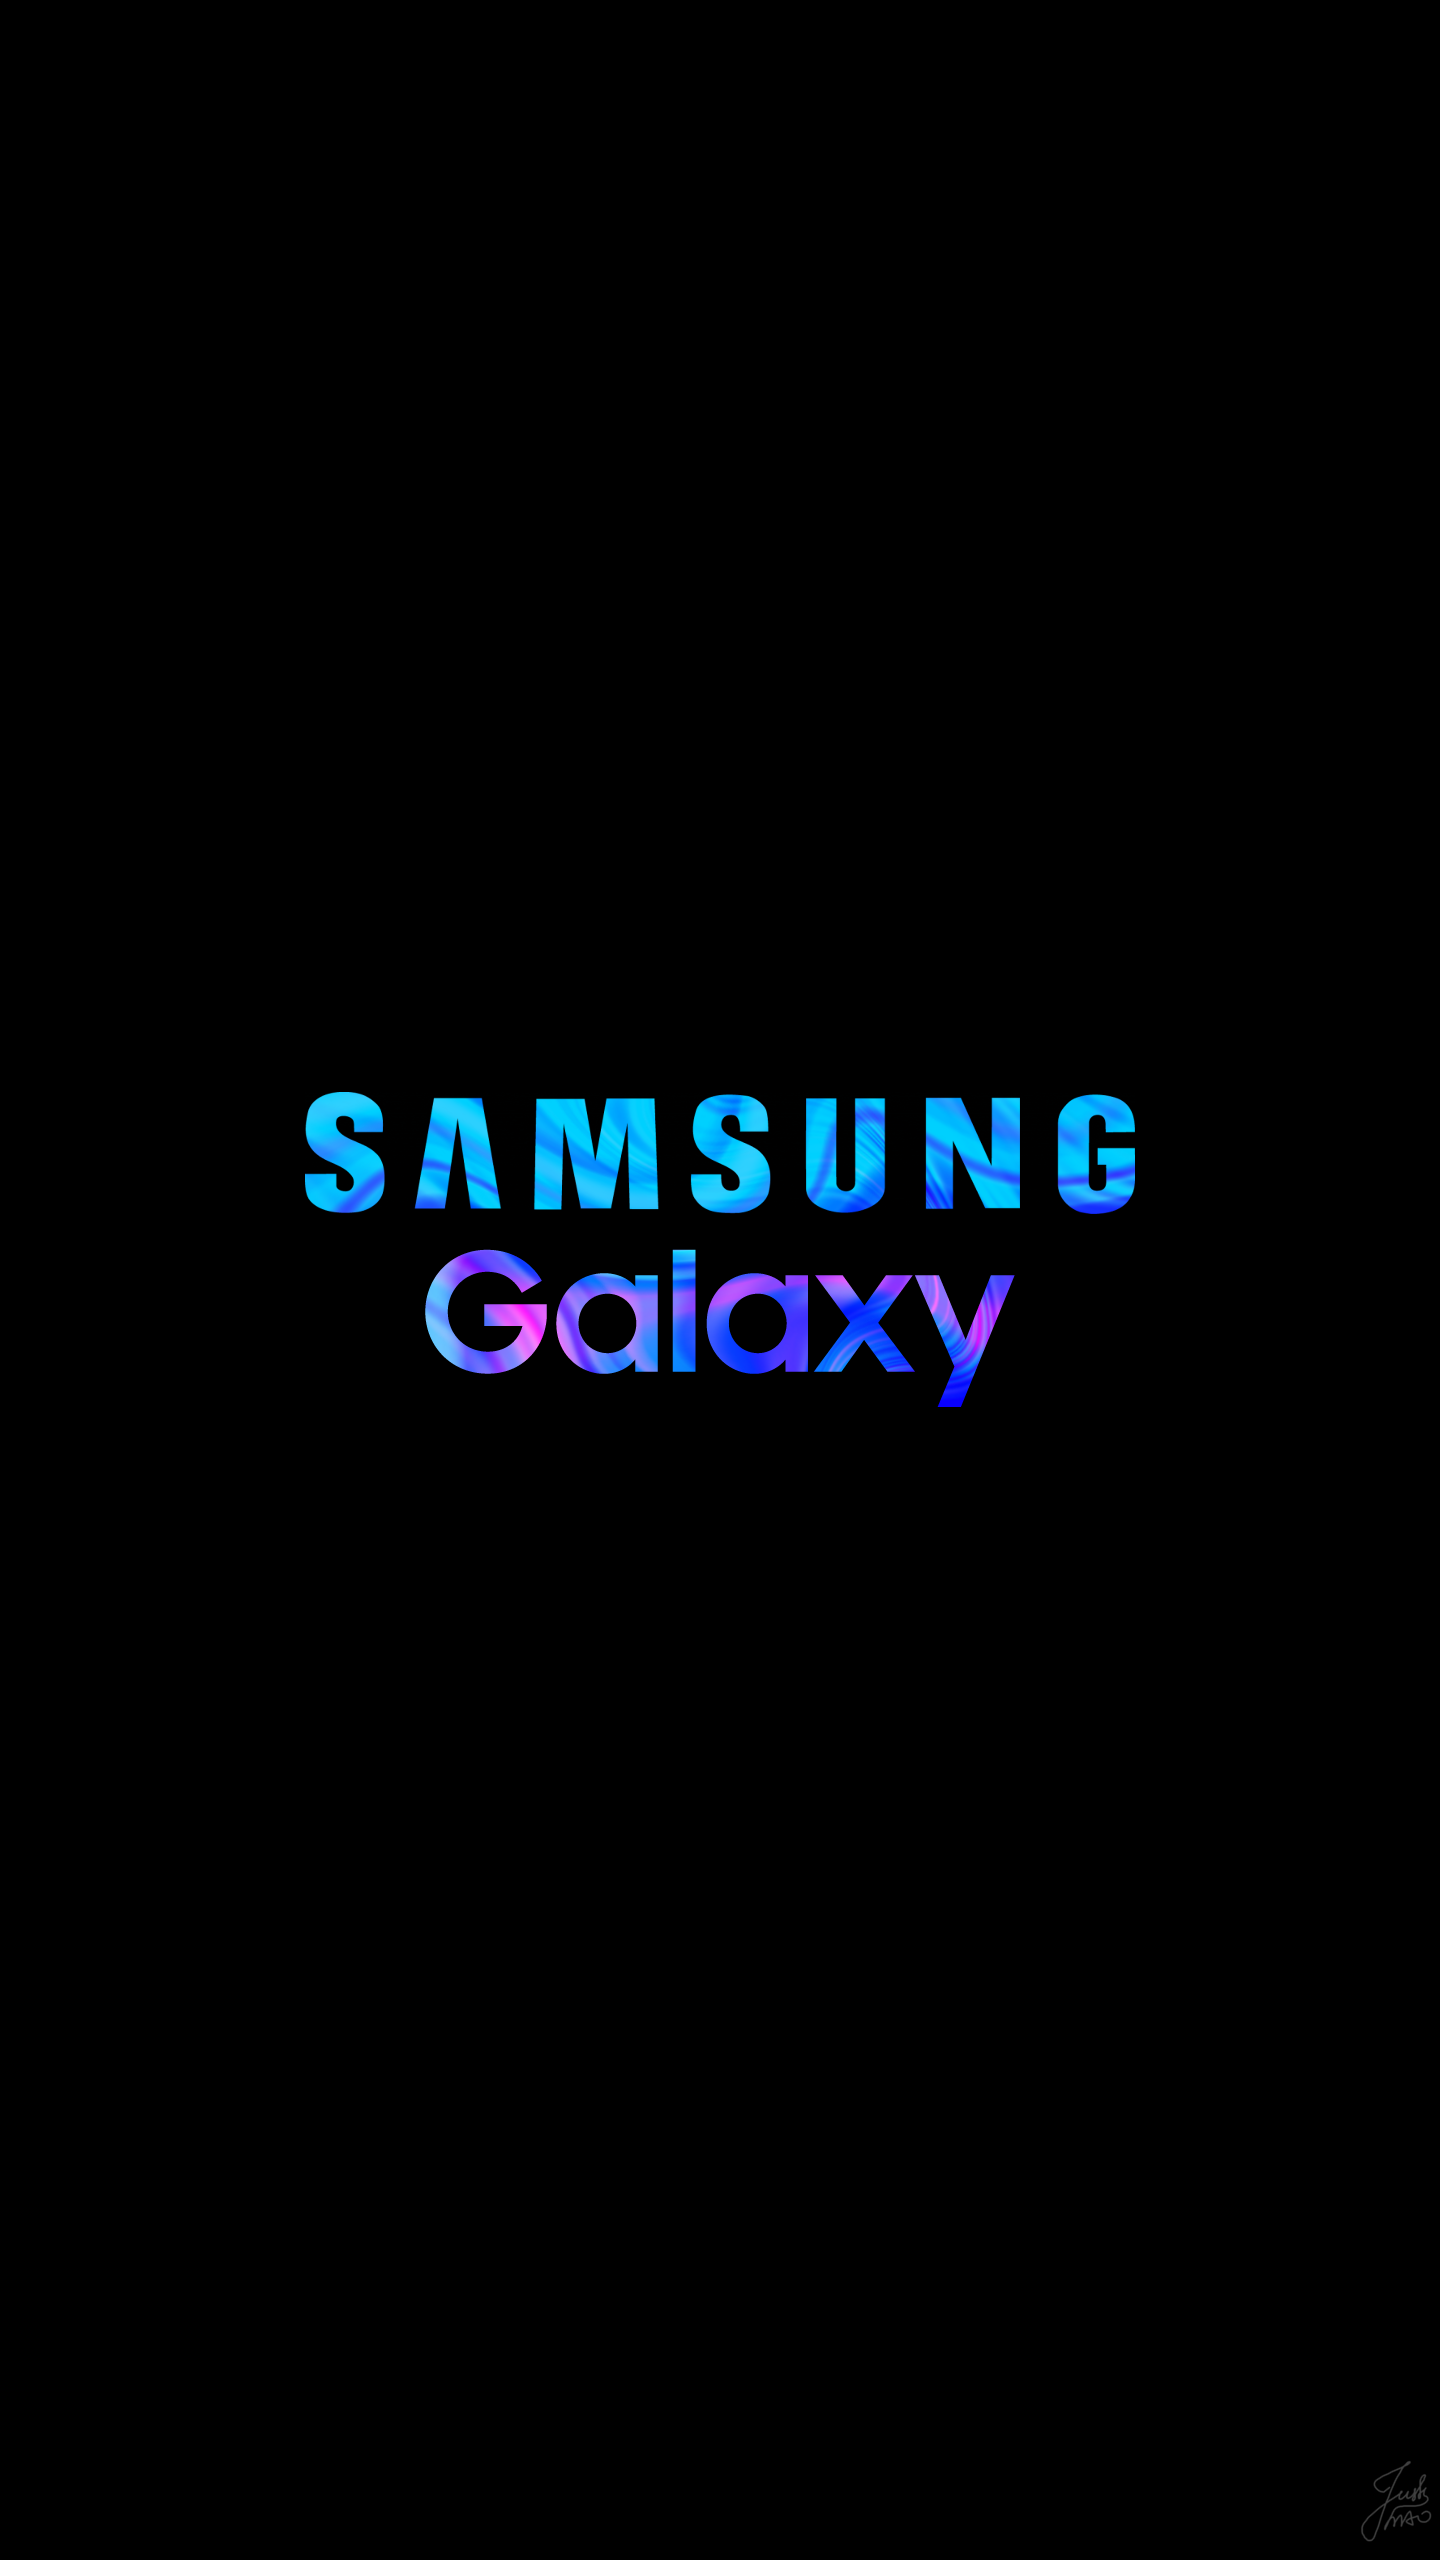 Samsung Galaxy phone wallpaper background lock screen Samsung